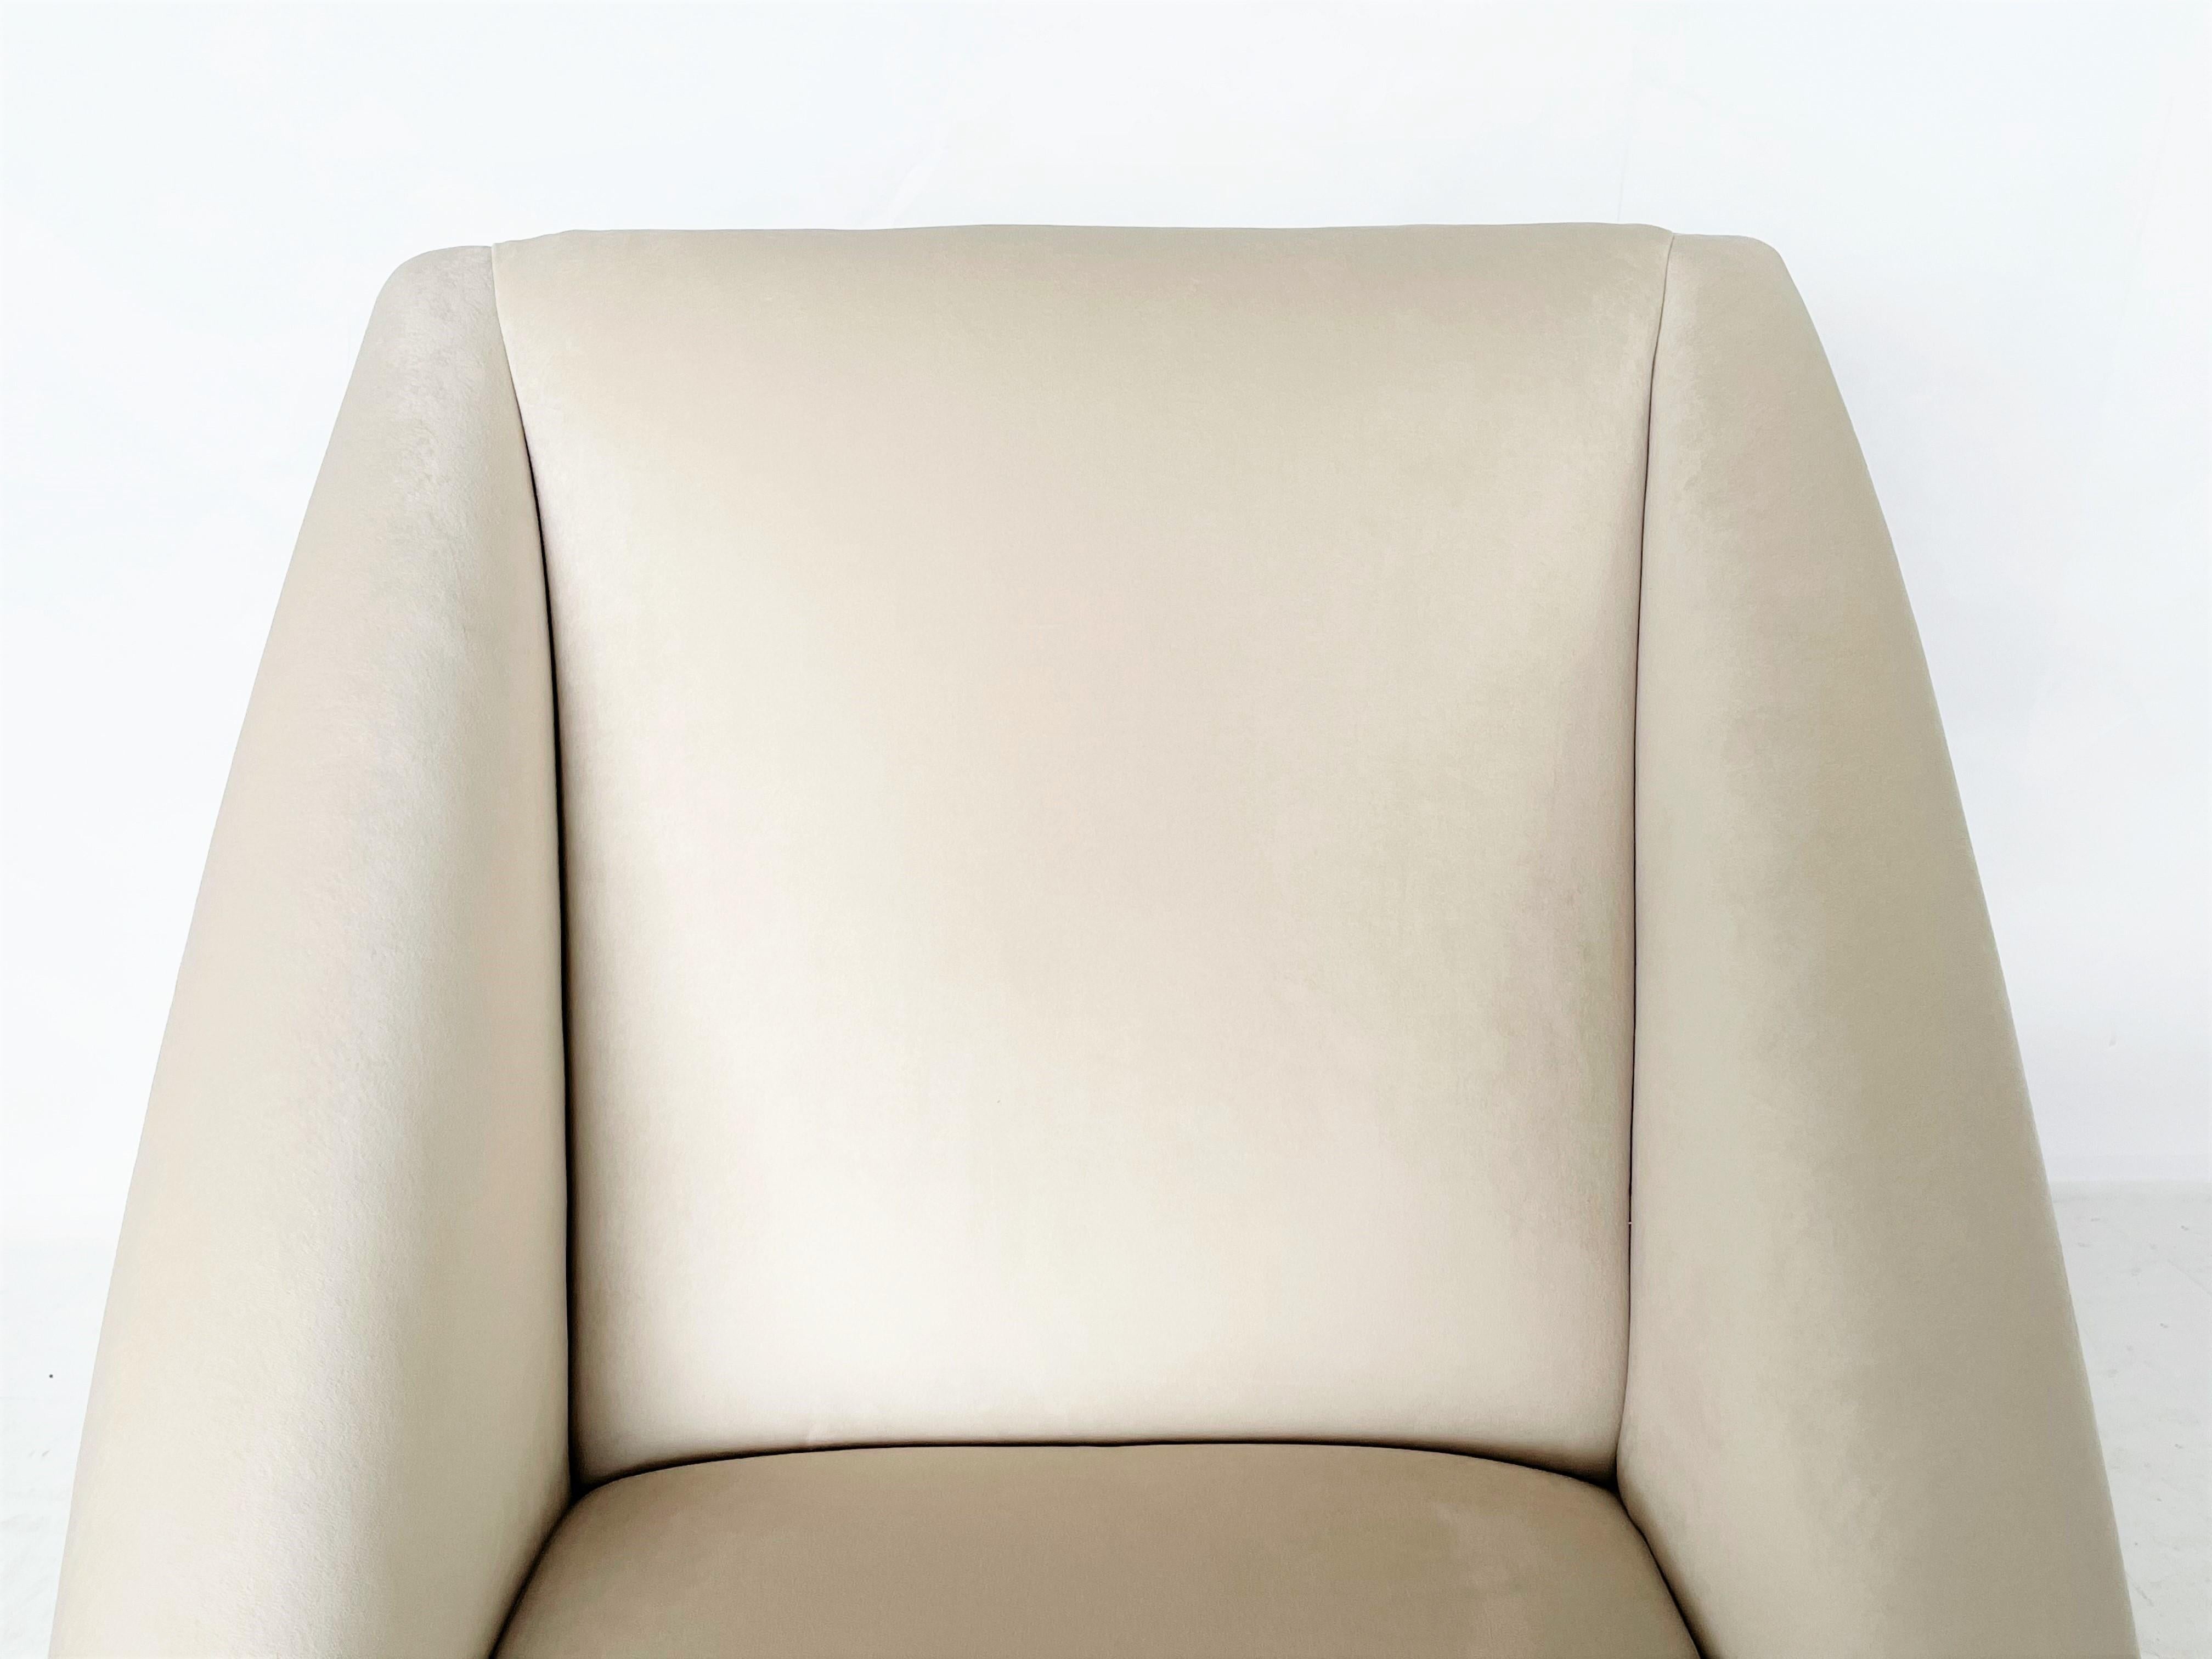 Pair of Geometric Italian Club or Lounge Chairs Attributed to Gio Ponti 1